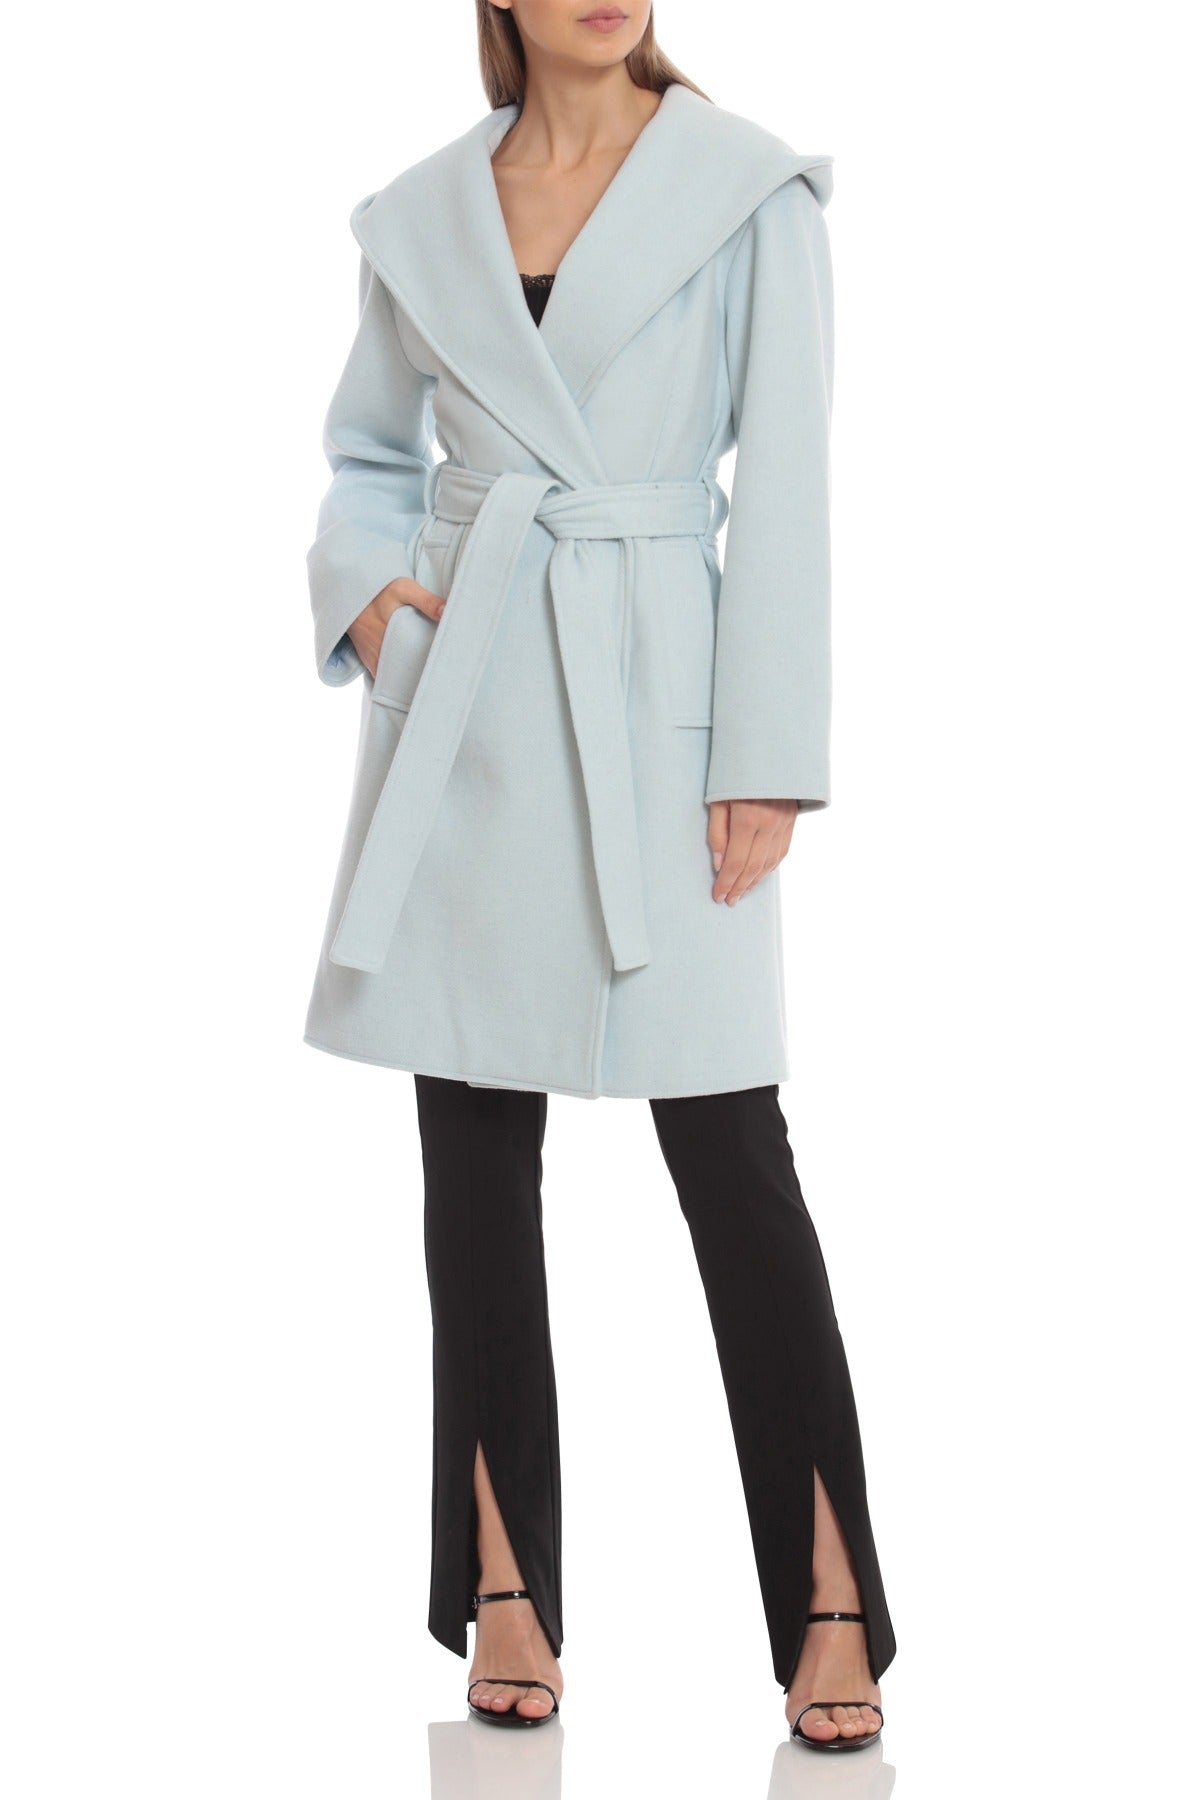 Twill Wool Blend Robe Coat Icy Blue - Women's Figure Flattering Designer Fashion Office to Date Night Coats